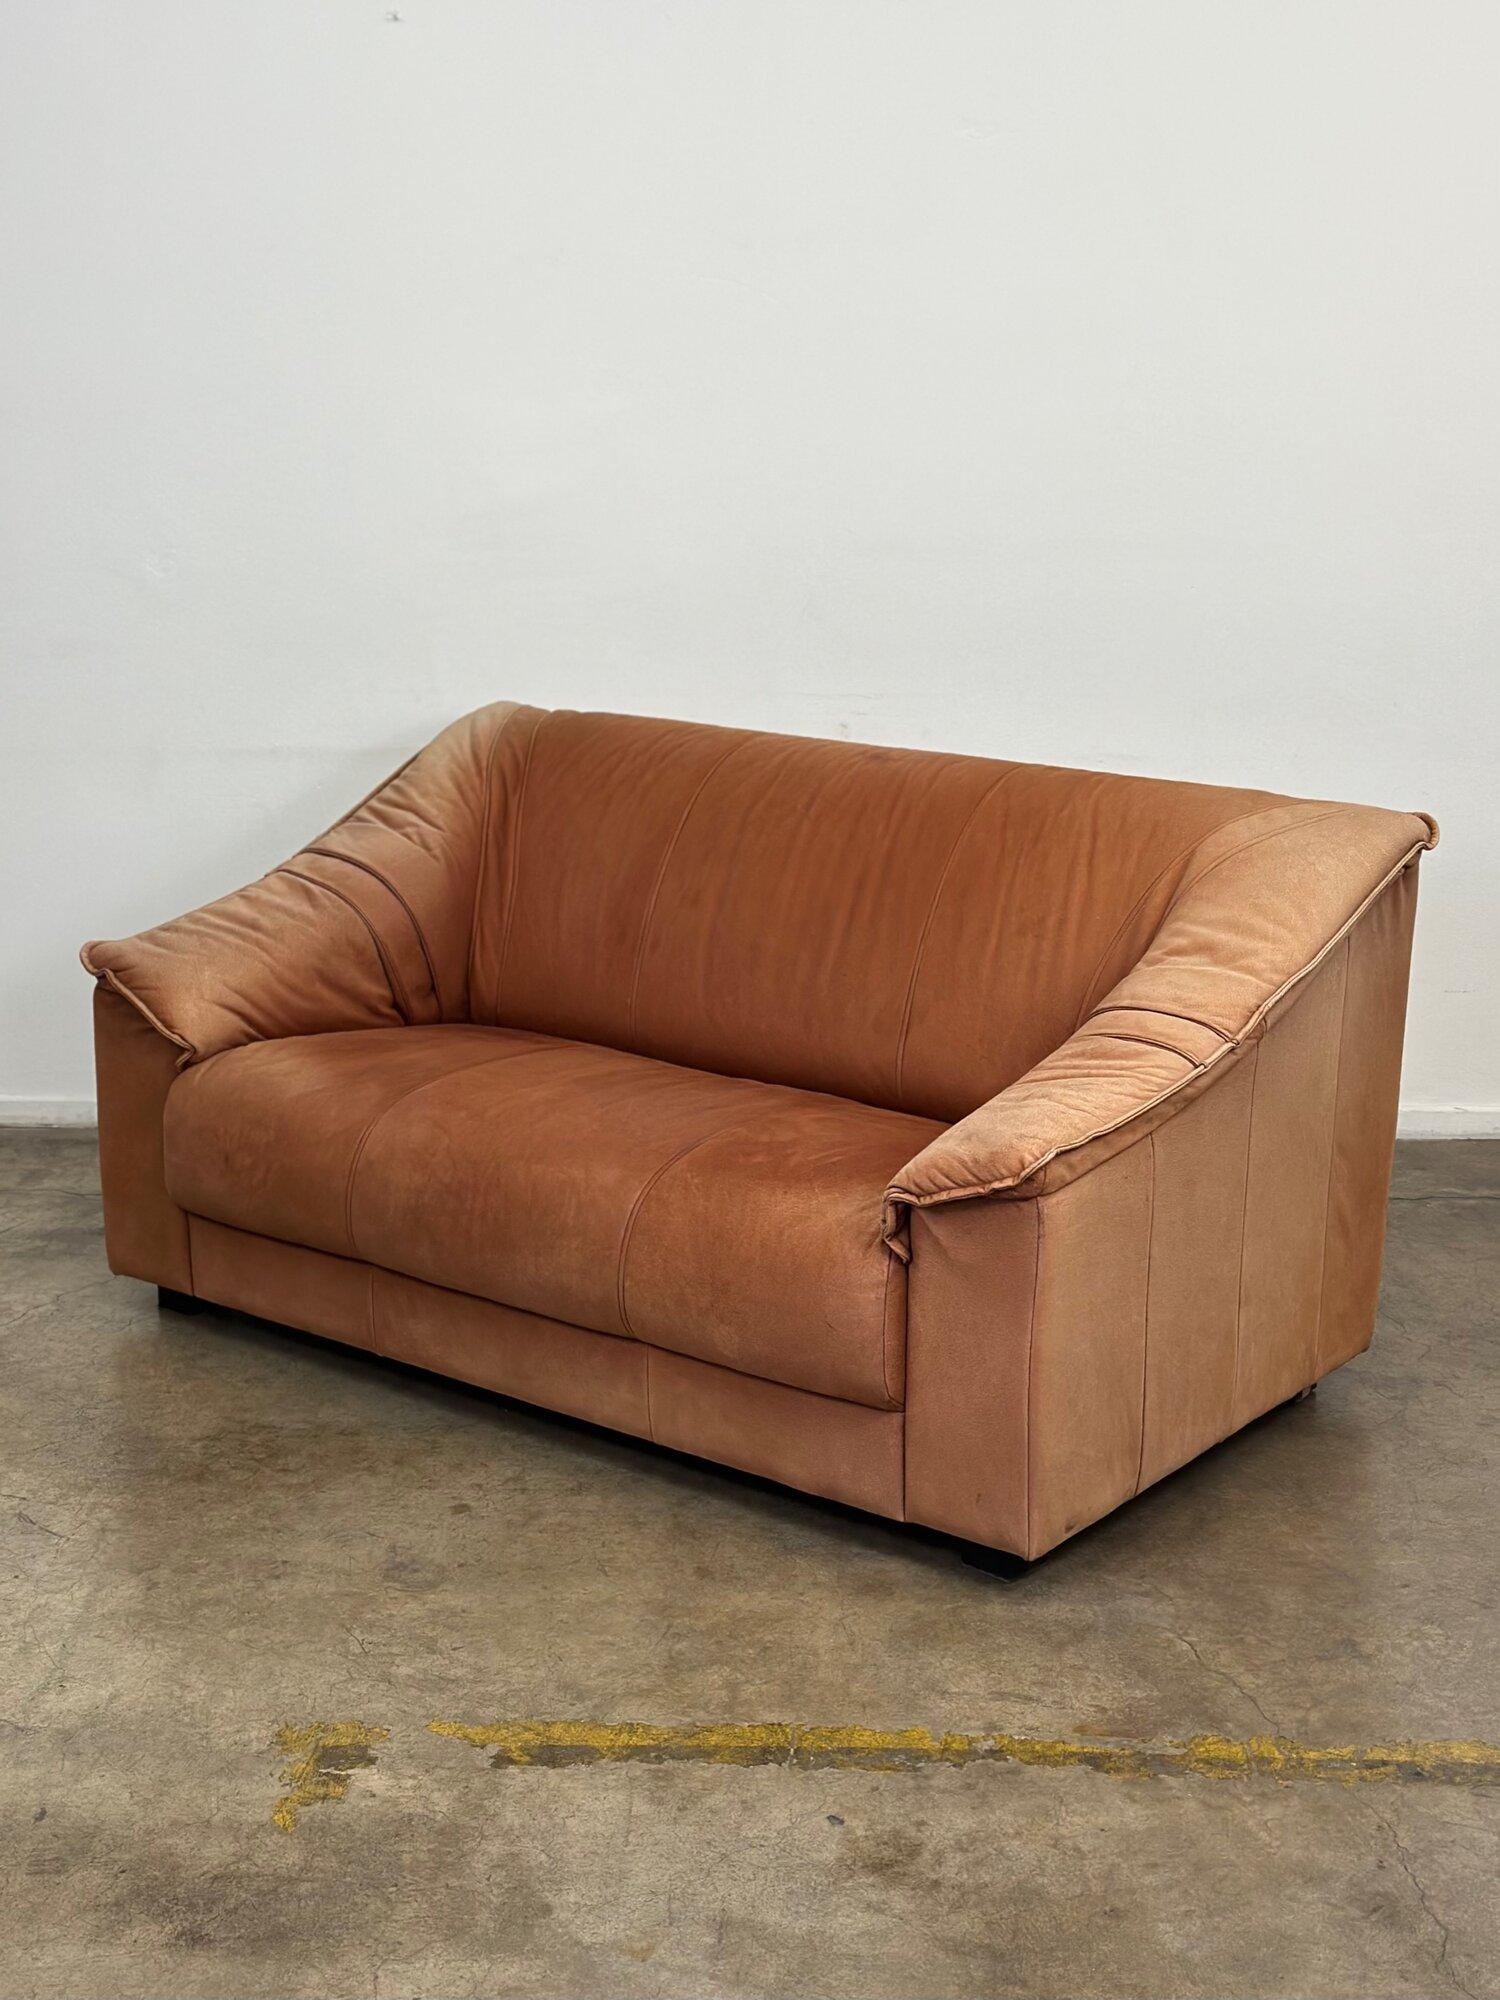 Ikea Halland post modern patchwork sofa 2